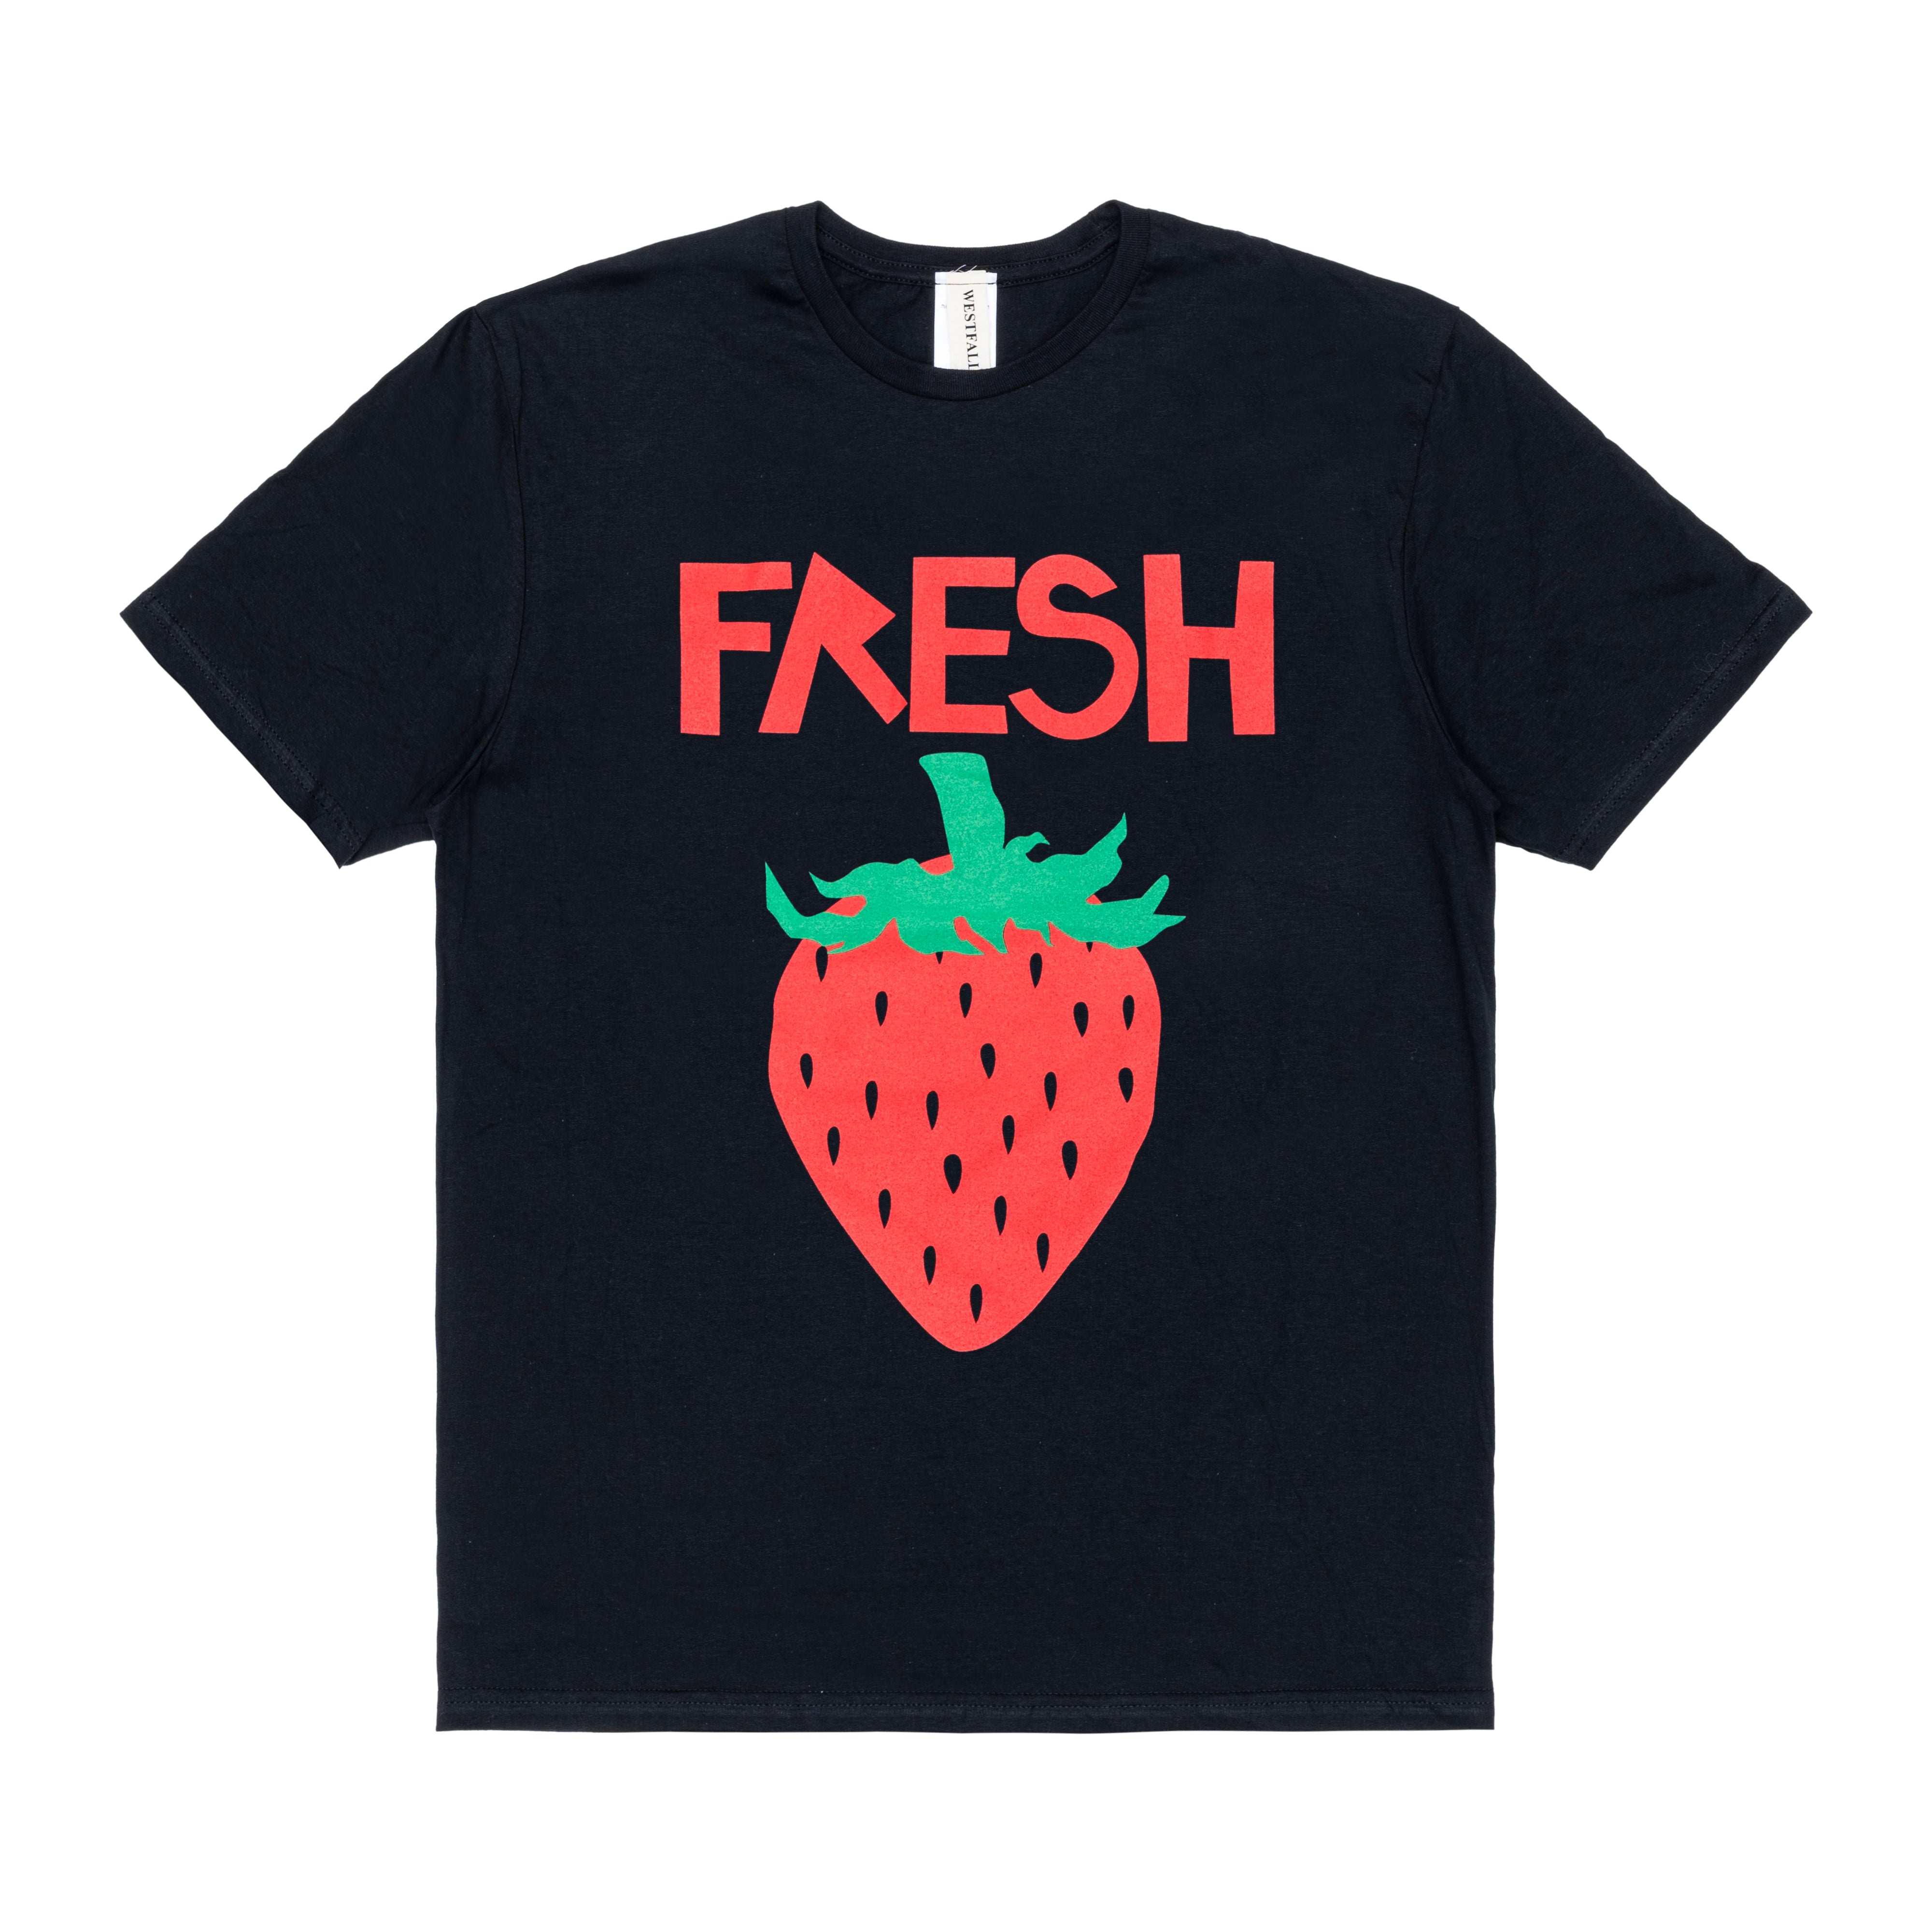 WESTFALL - Fresh T-Shirt Ss -T041(Black)